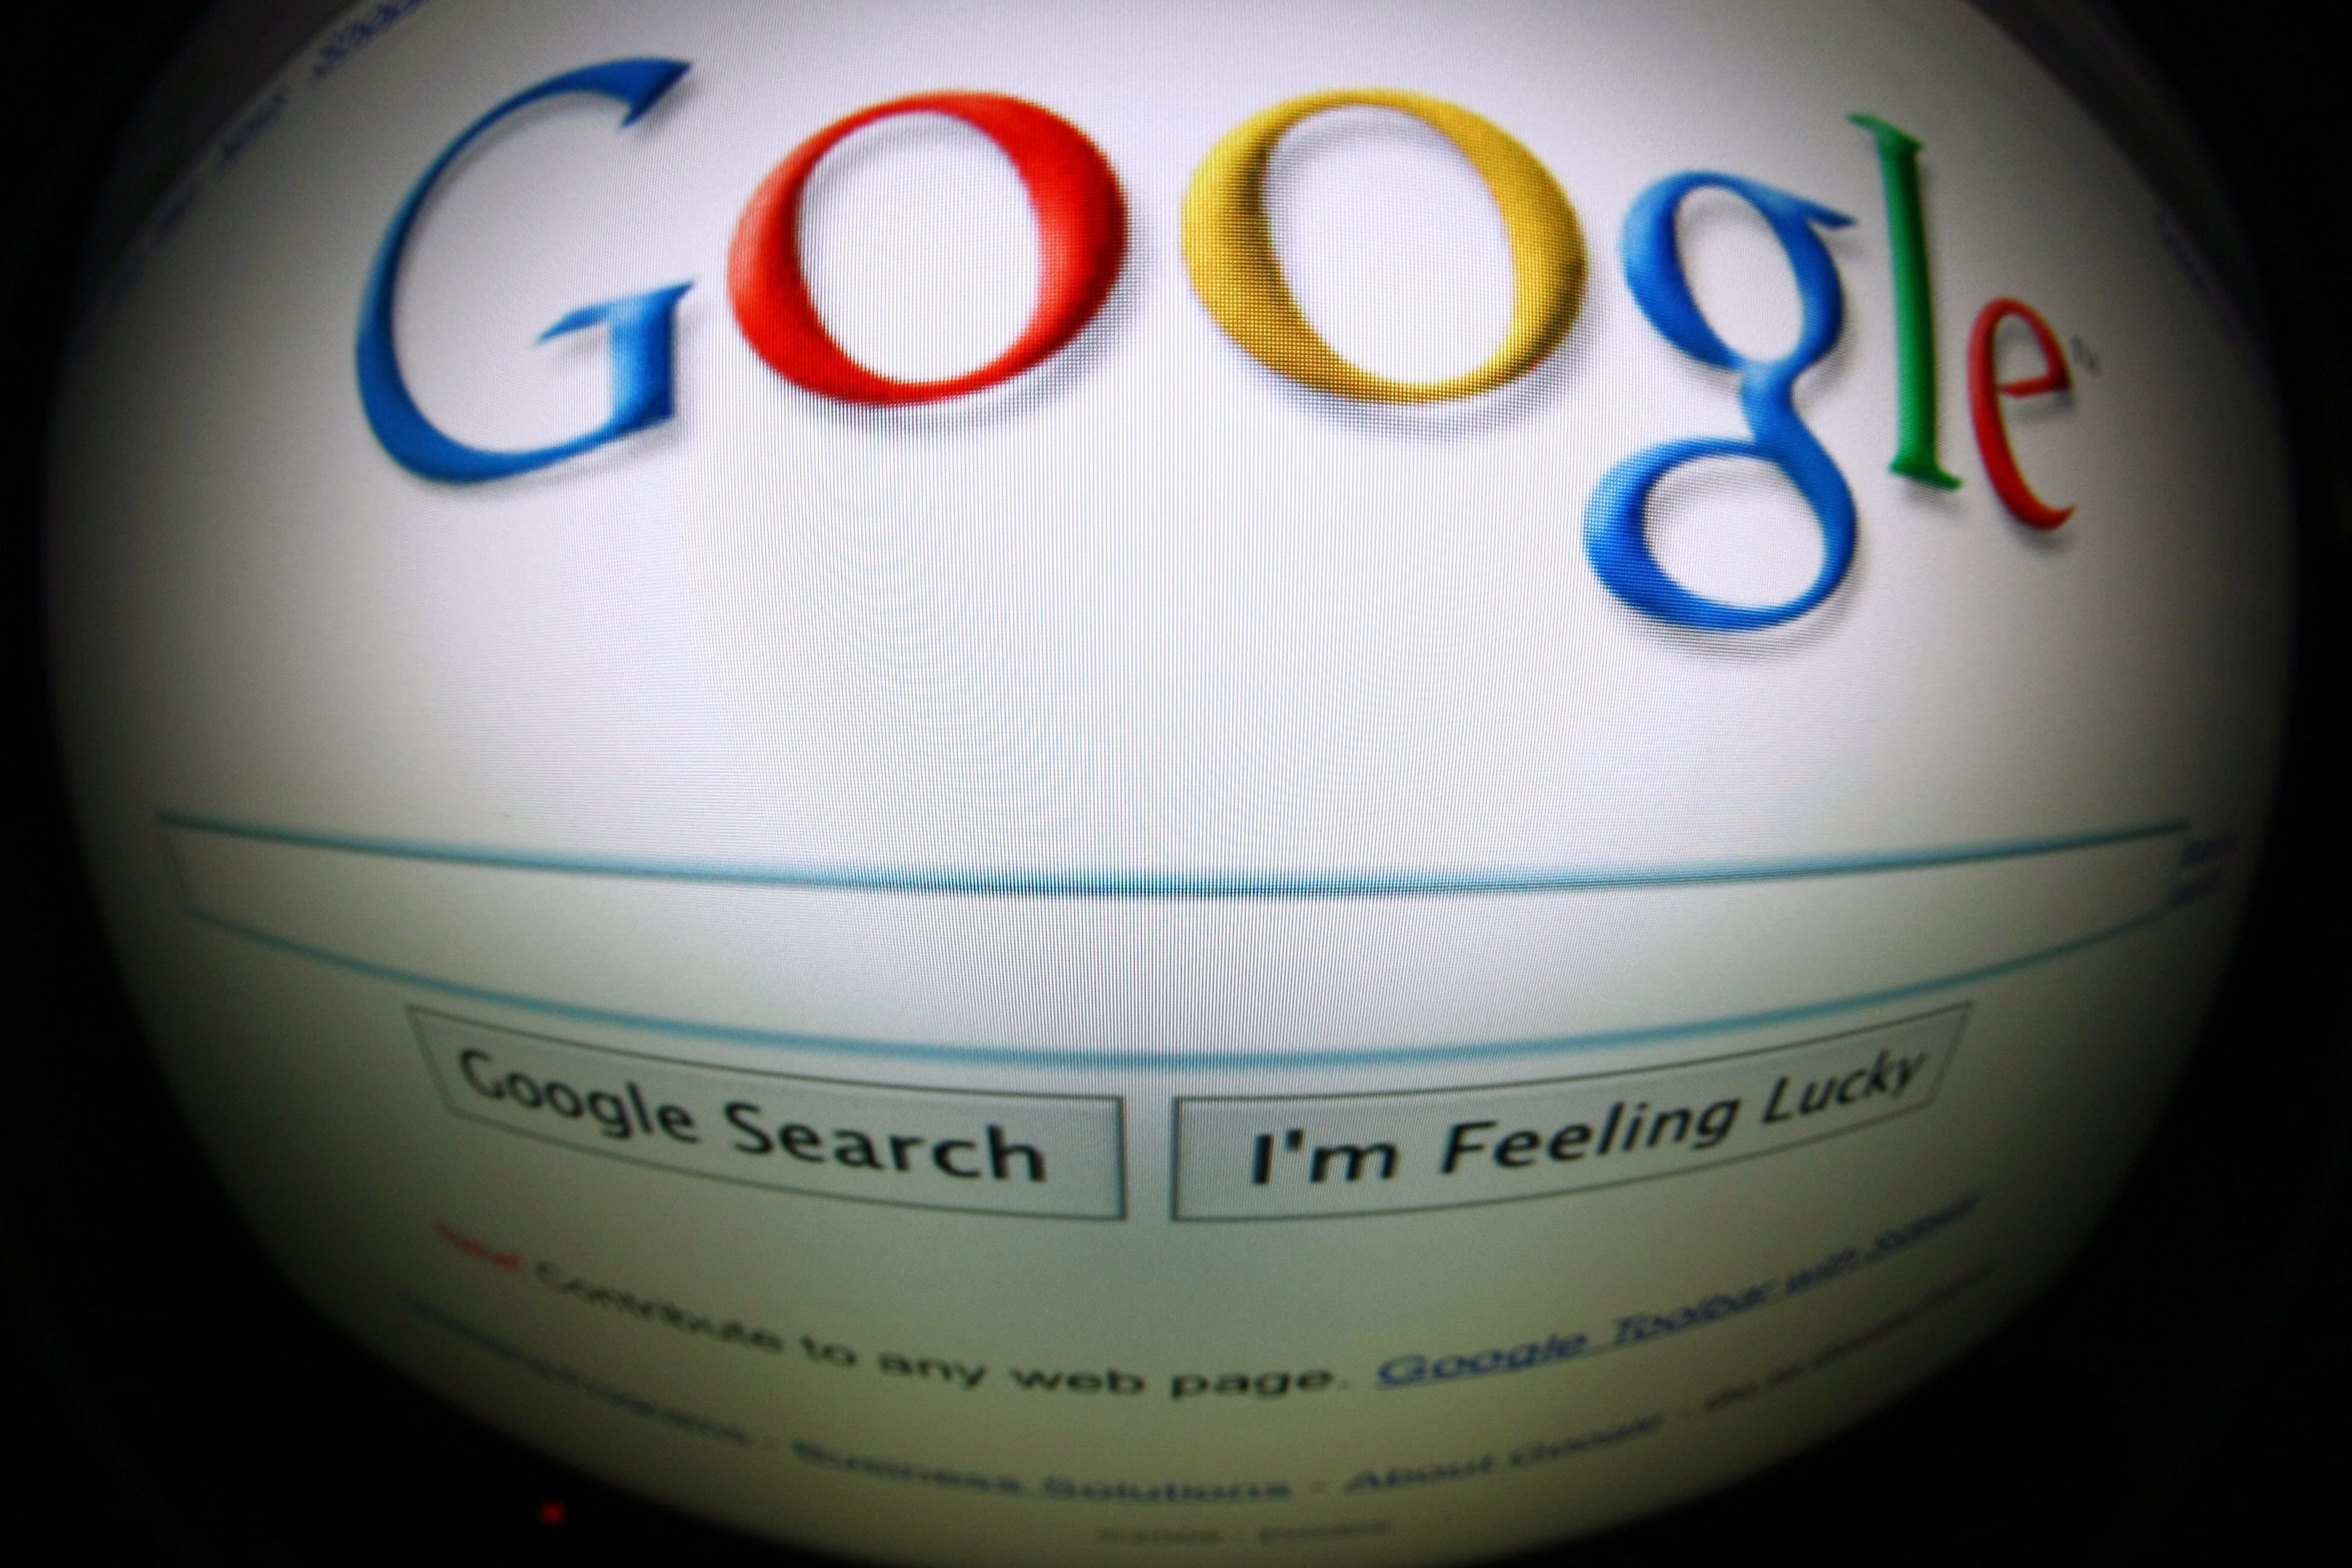 Sex Videos Google - Google seeks to scrub Web of child porn | CNN Business